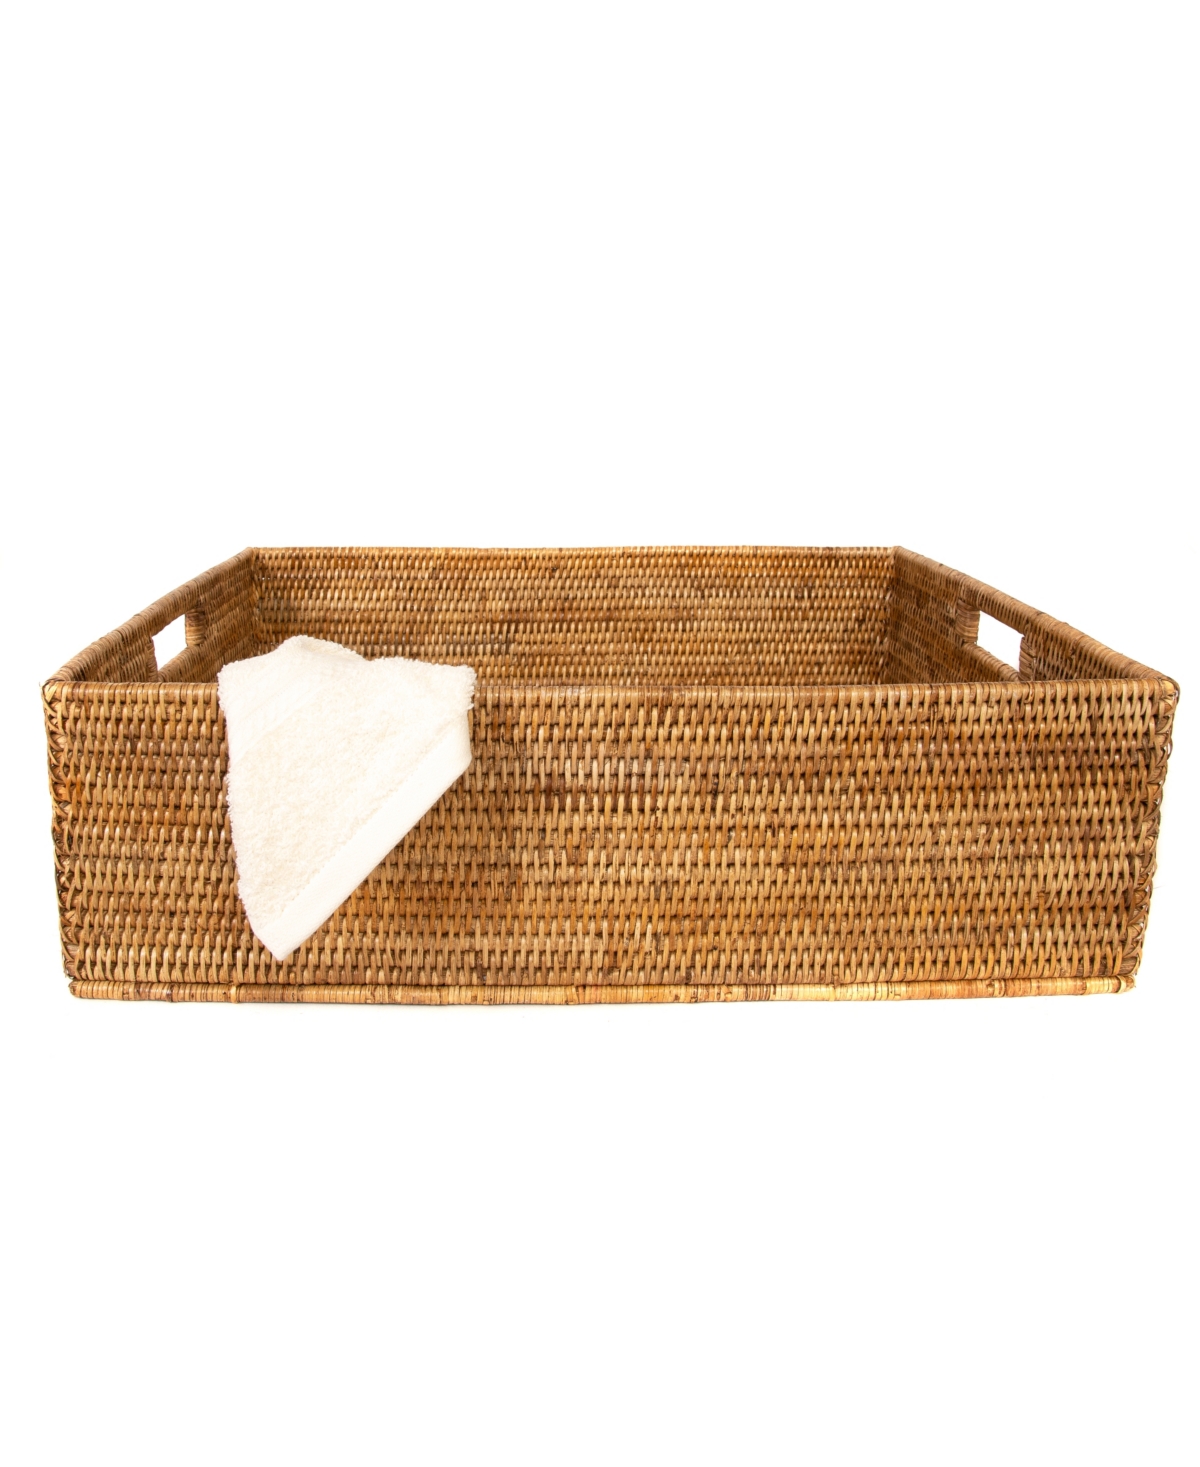 Shop Artifacts Trading Company Artifacts Rattan Rectangular Storage Basket In Honey Brown